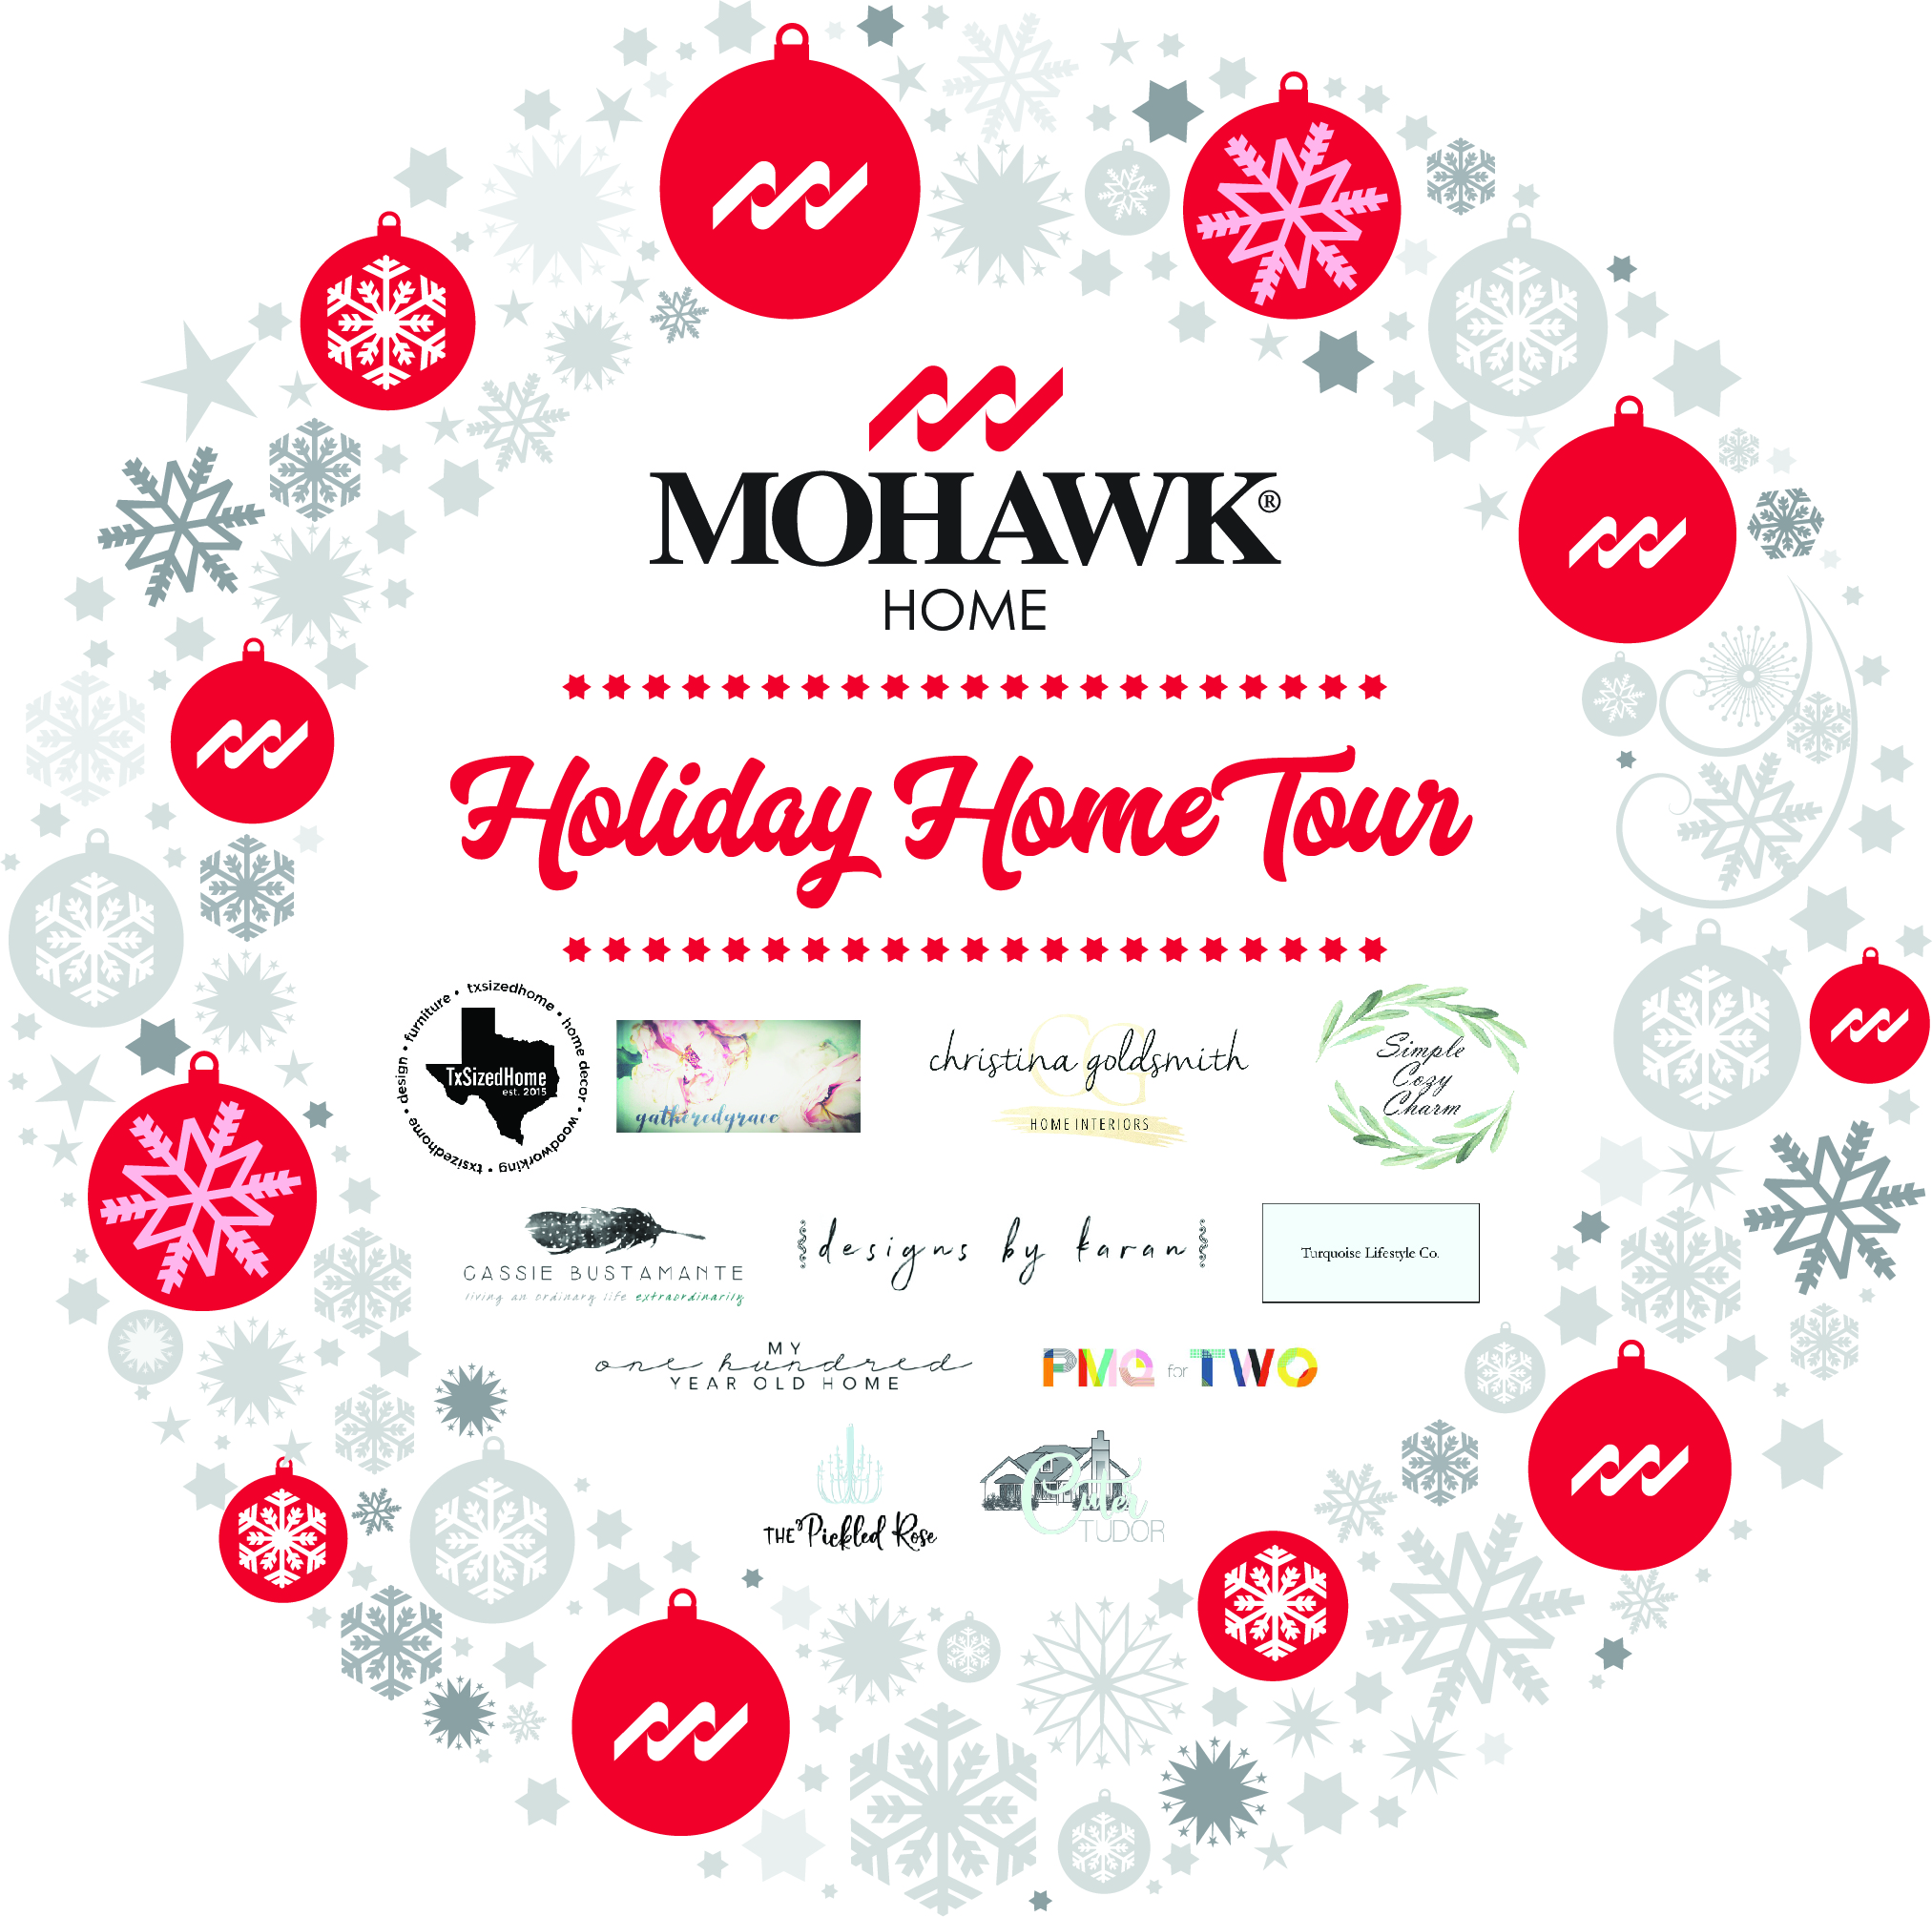 MM_Mohawk_Home_Holiday_Blog_Tour_Logo_v2_HighRes